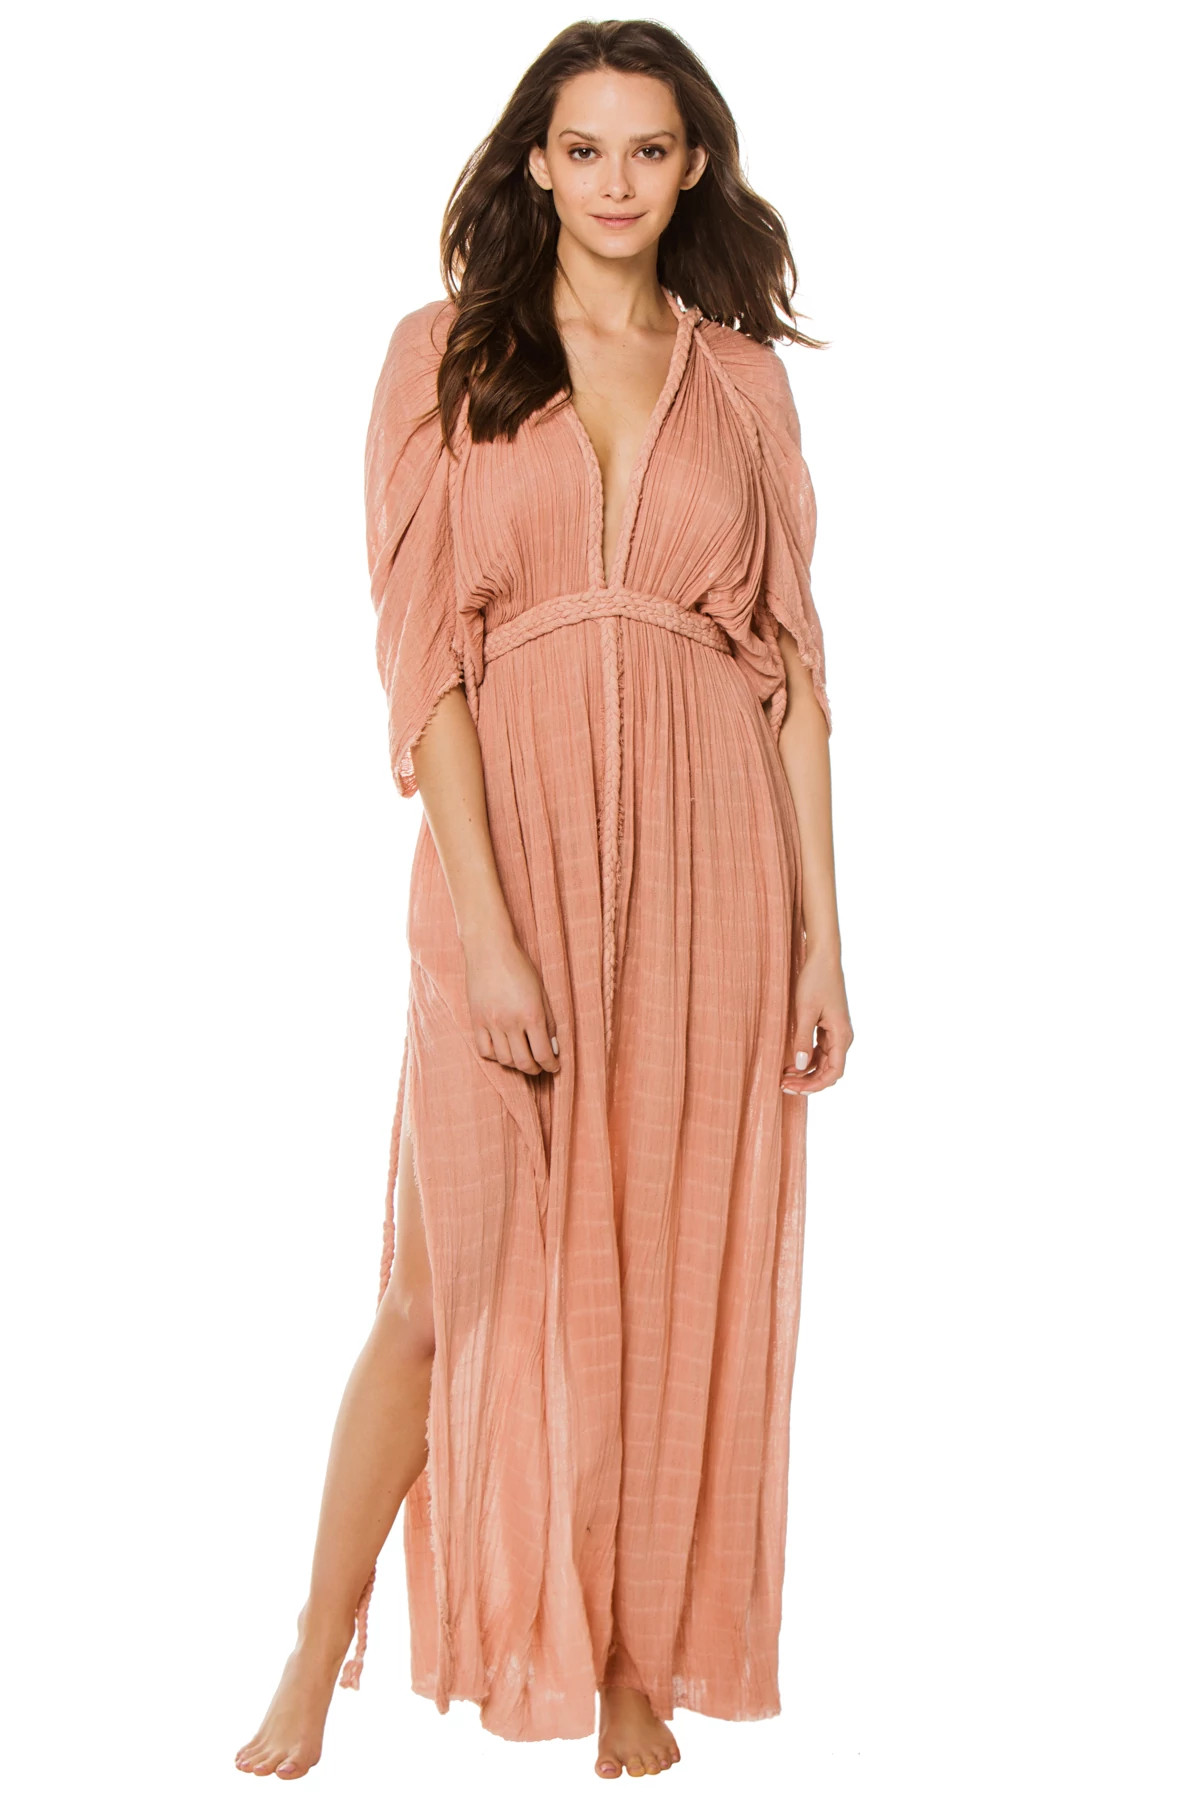 ROSE Athena Full Length Goddess Gown image number 1